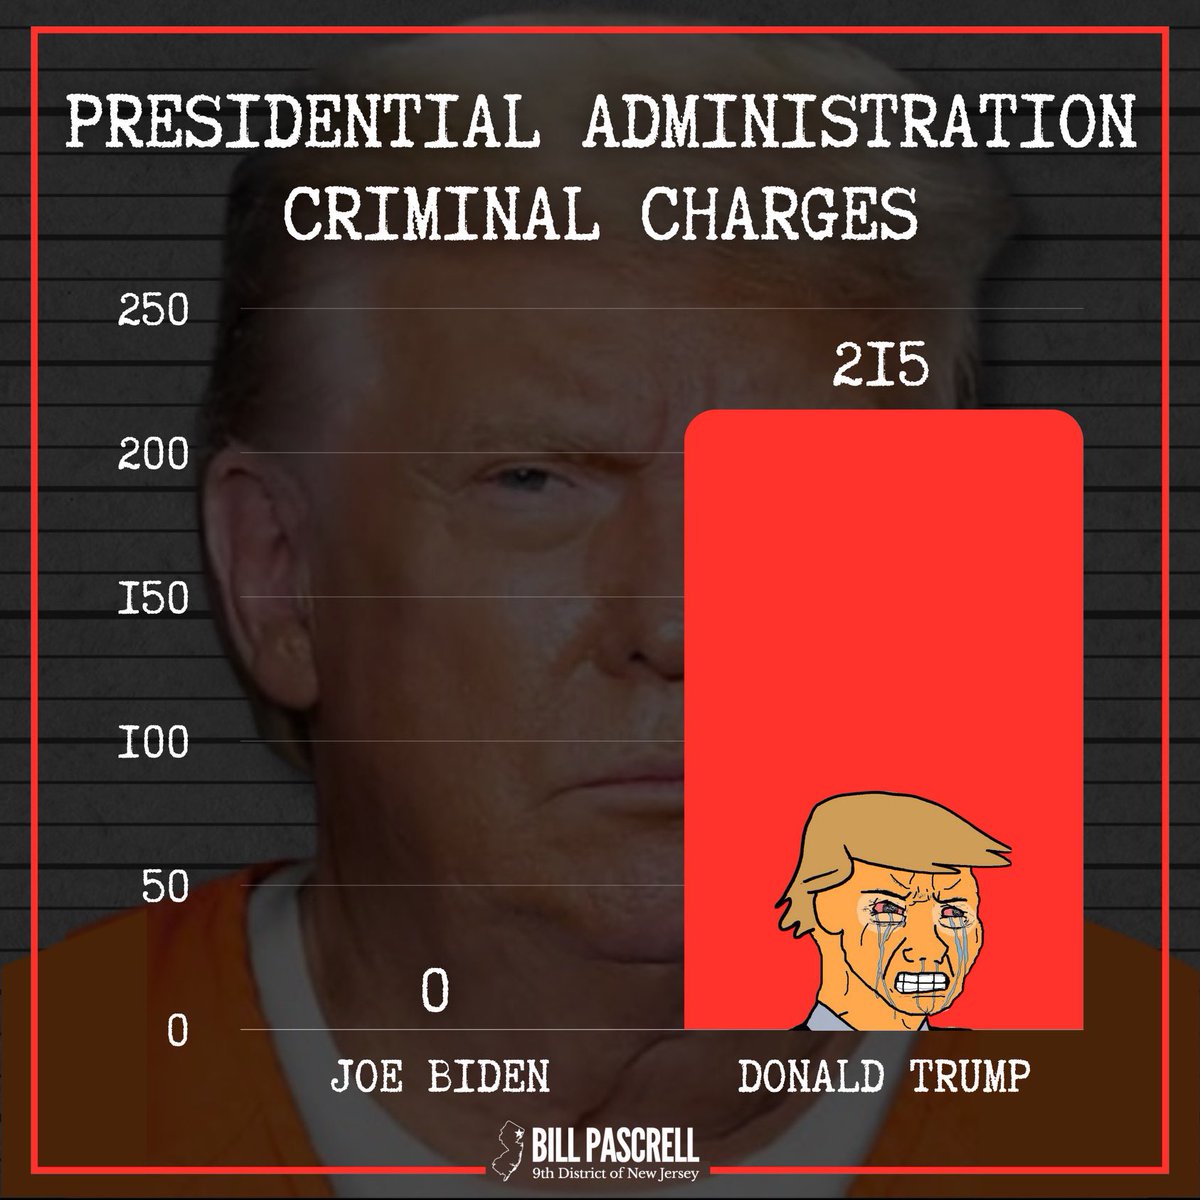 Criminal charges by President: Joe Biden: 0 Donald trump: 215